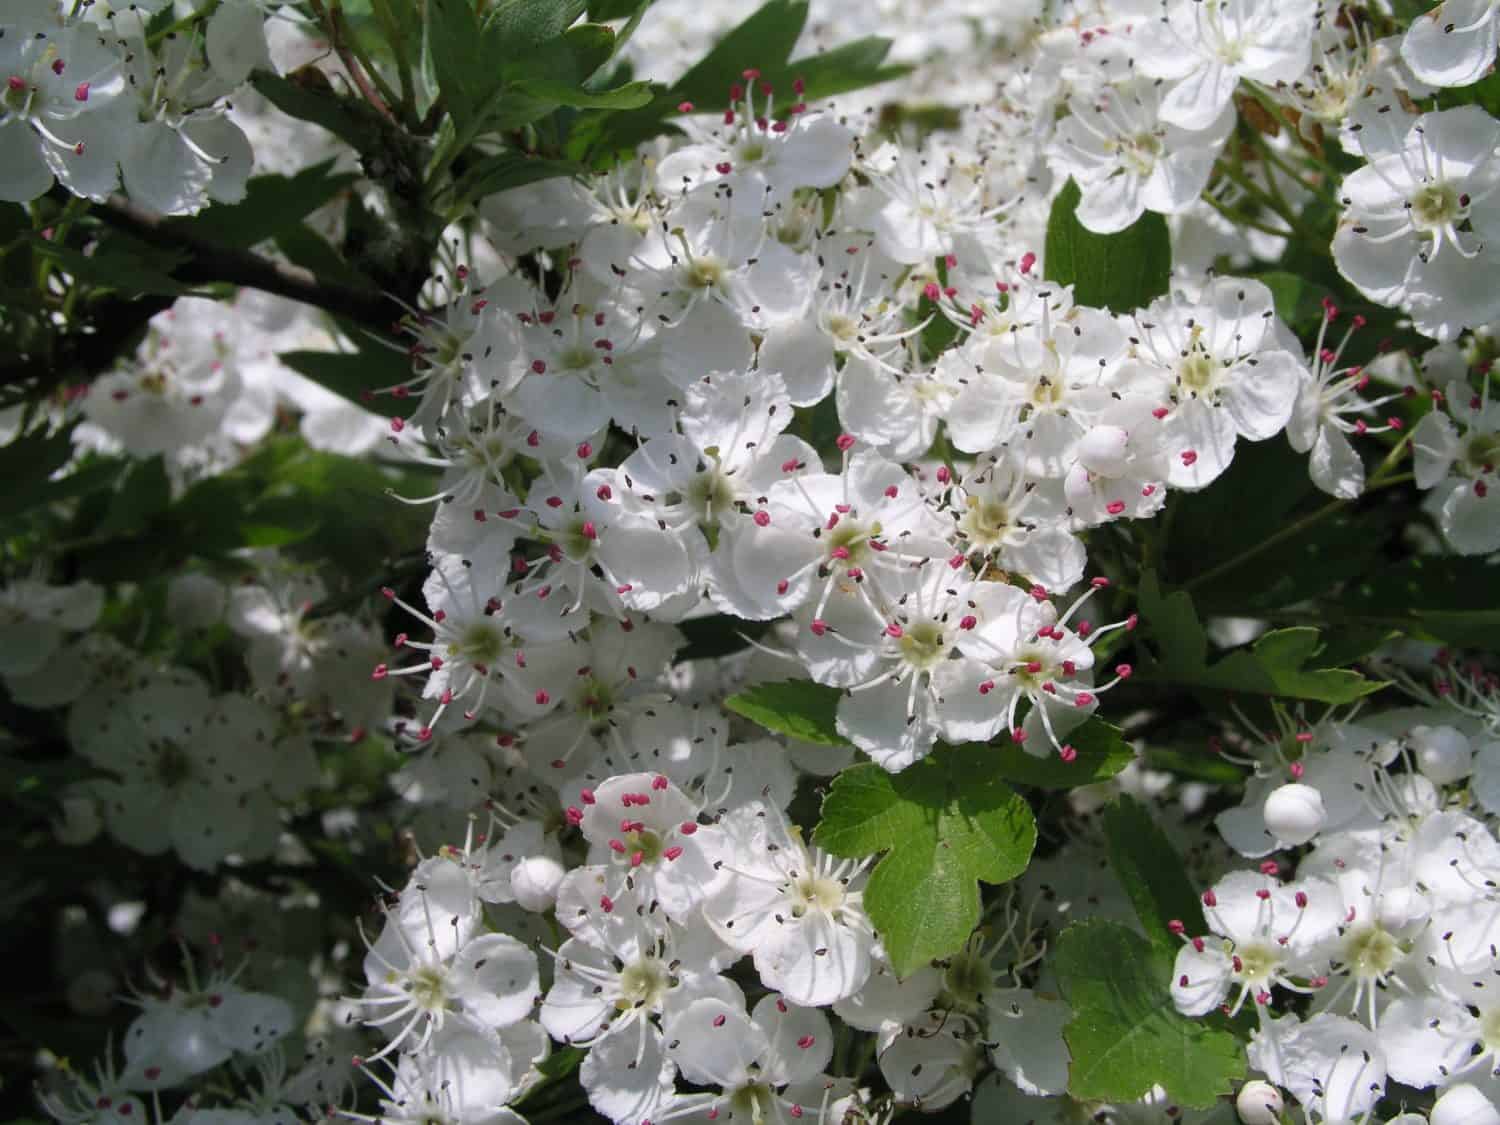 Crataegus in fiore, biancospino, stramonio, albero di maggio, biancospino o biancospino bellissimi fiori bianchi.  C. coccinea, C. punctata, C. ambigua e C. douglasii